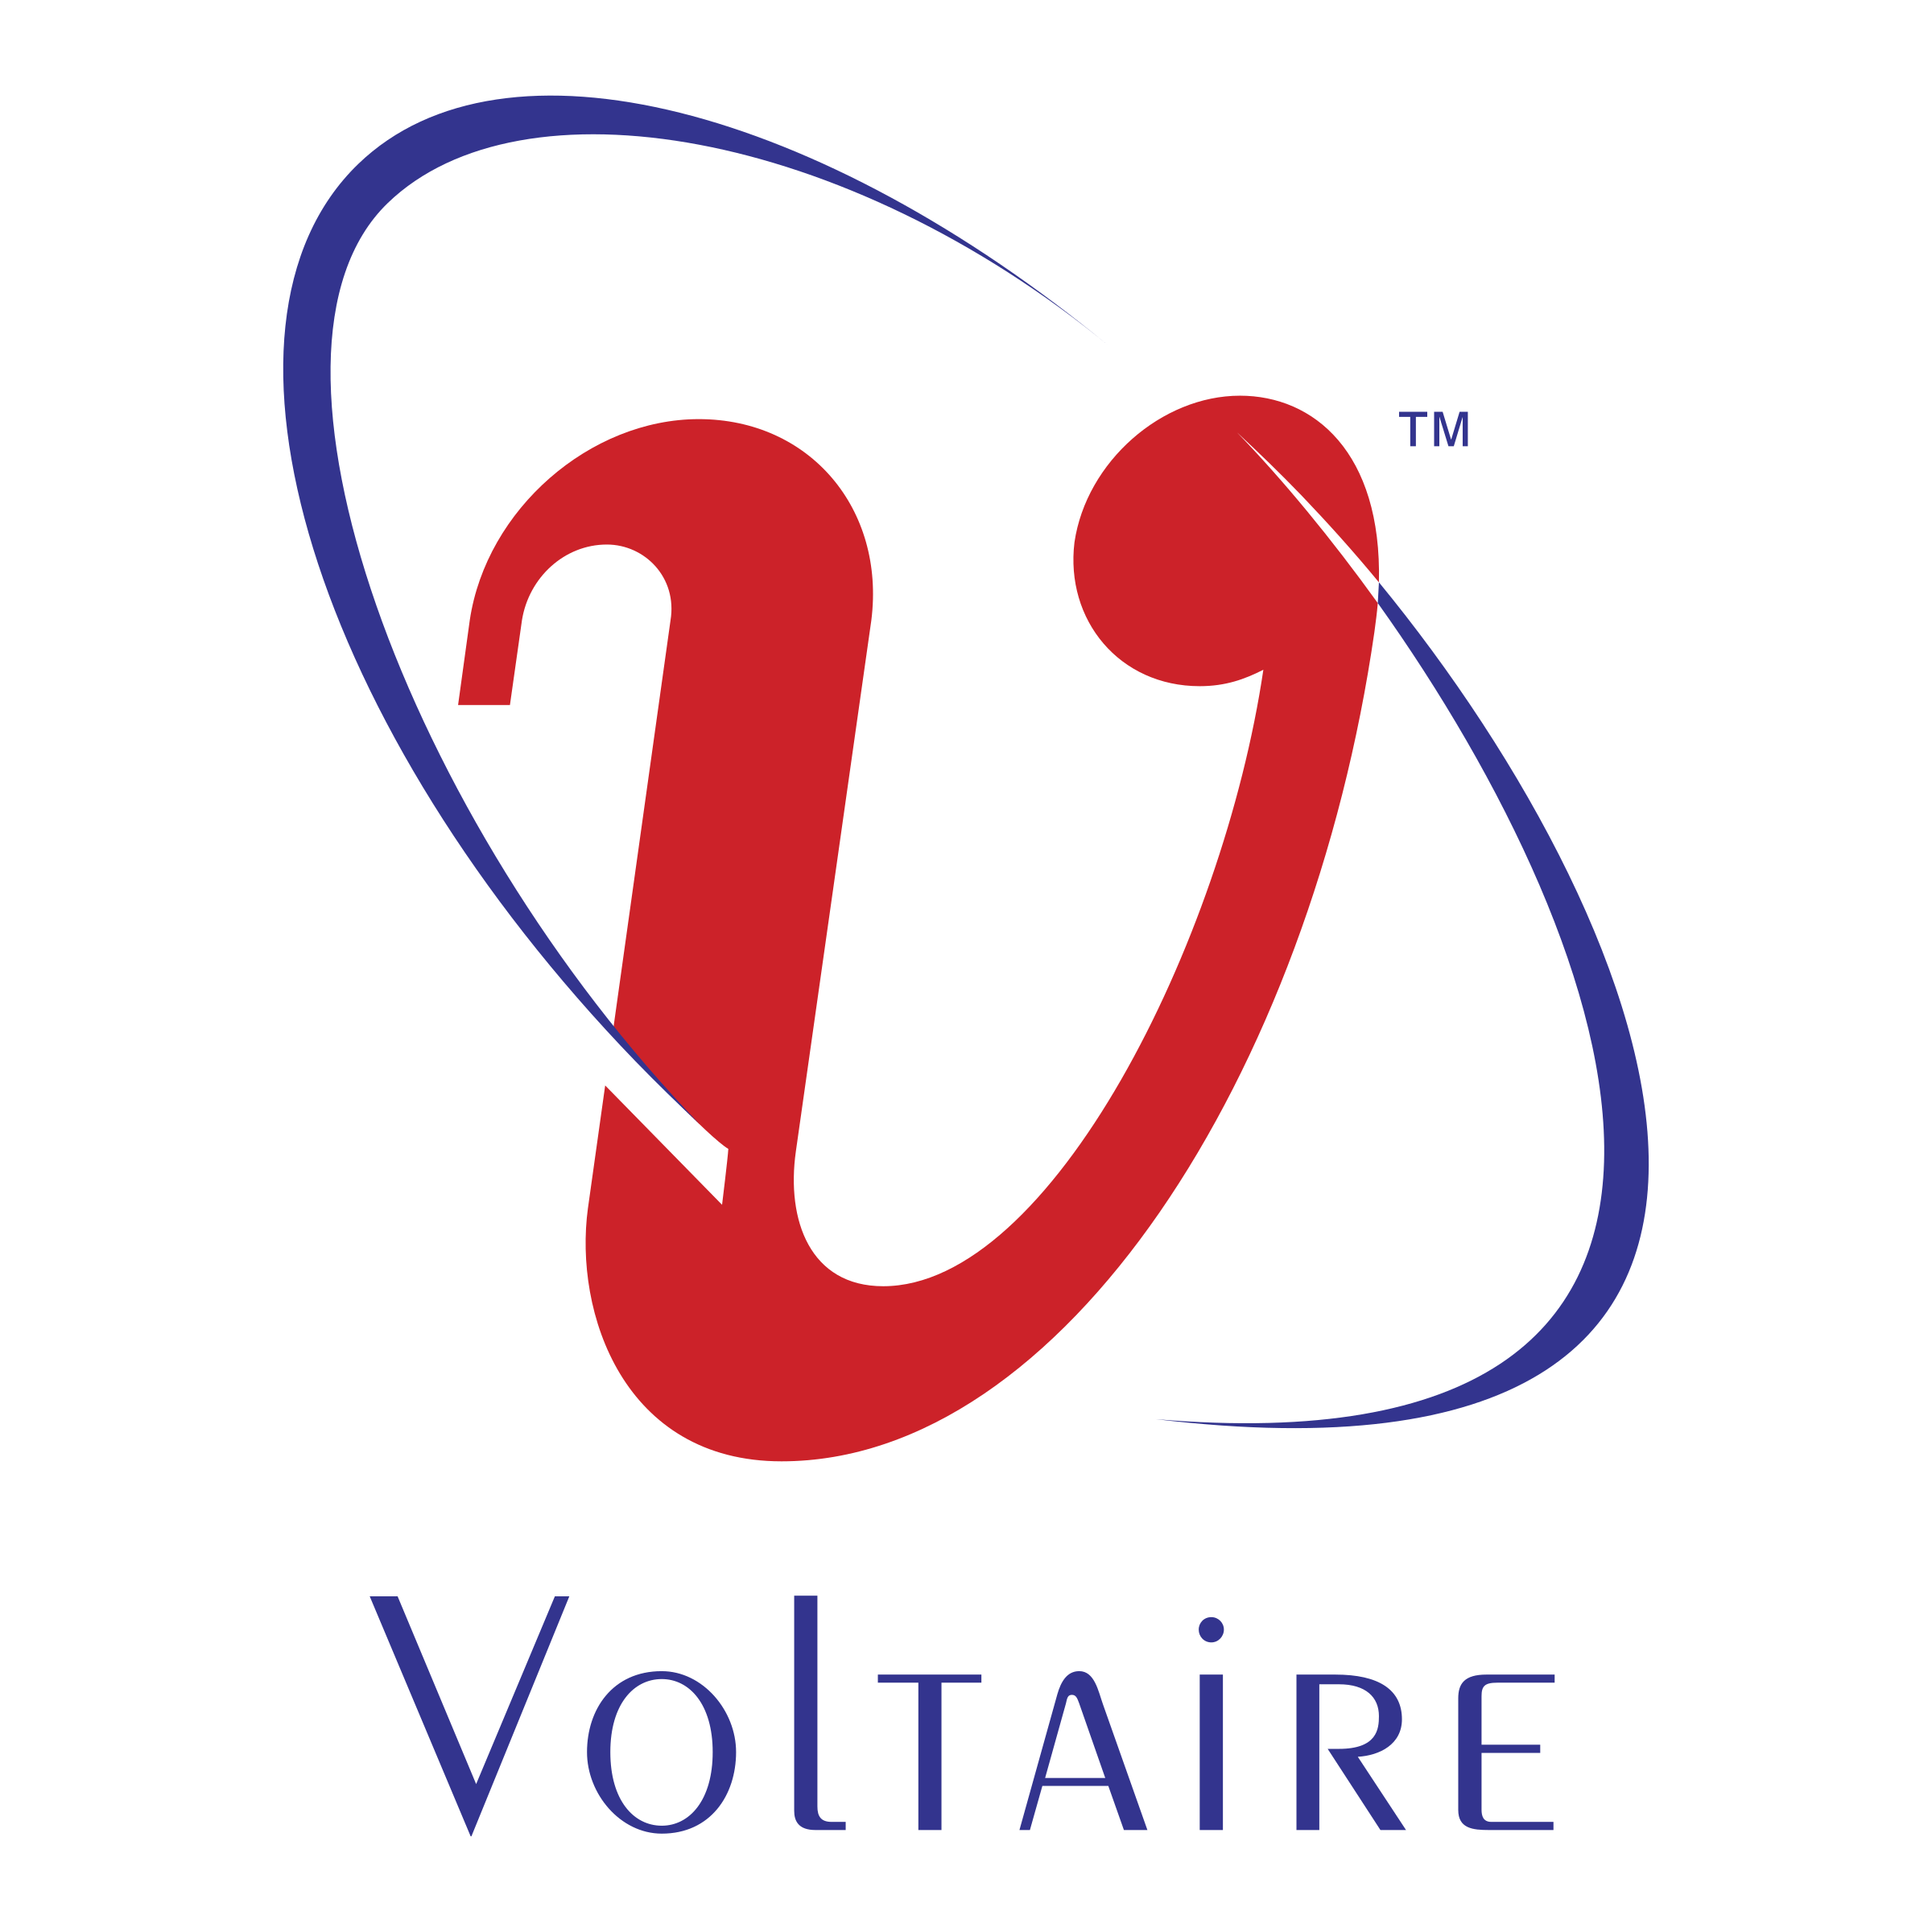 Voltaire Logo - Voltaire Logo PNG Transparent & SVG Vector - Freebie Supply